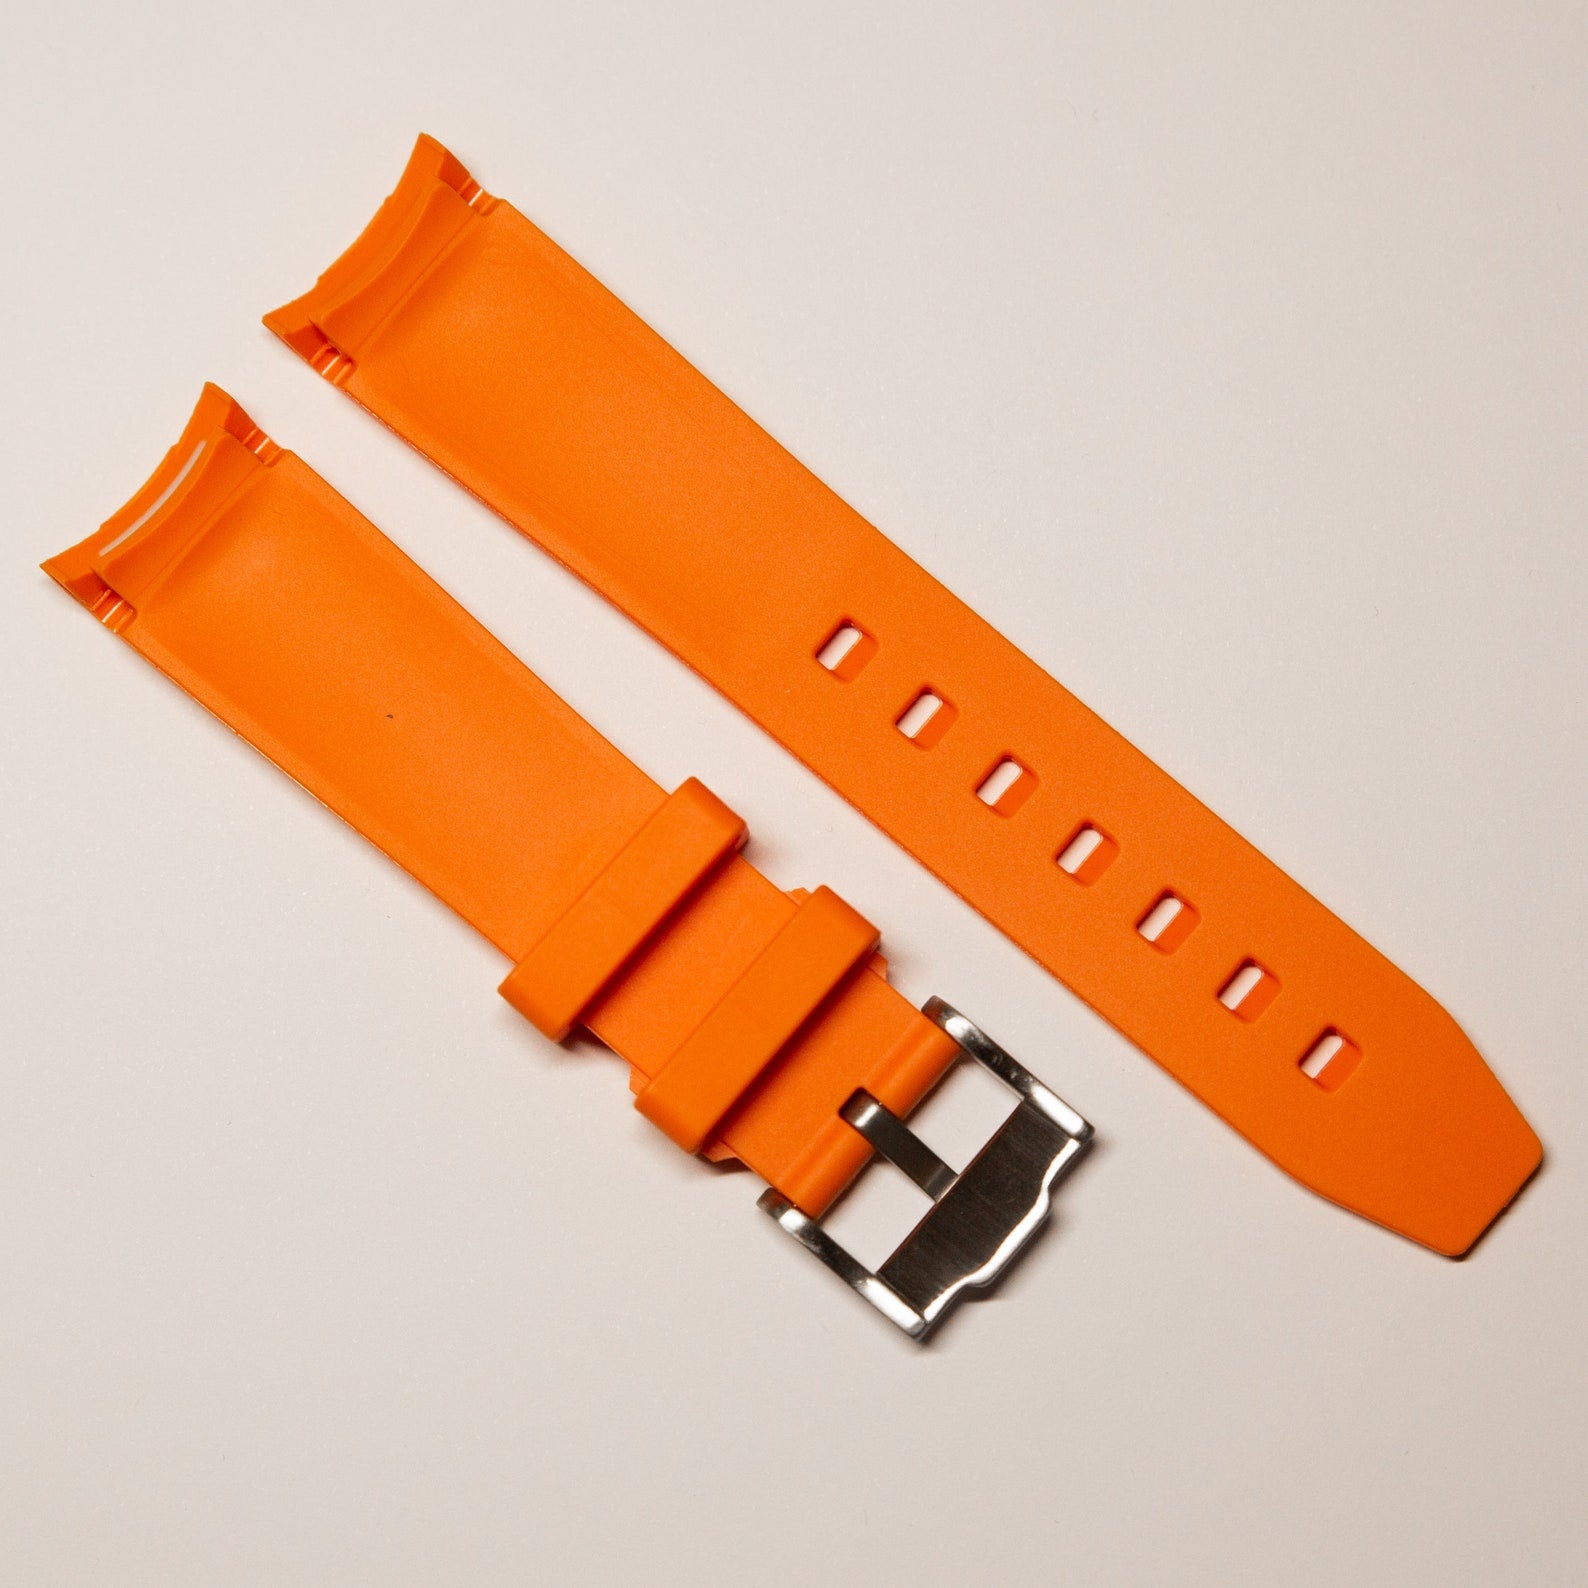 MoonSwatch Luxury Strap Orange "White Accent"